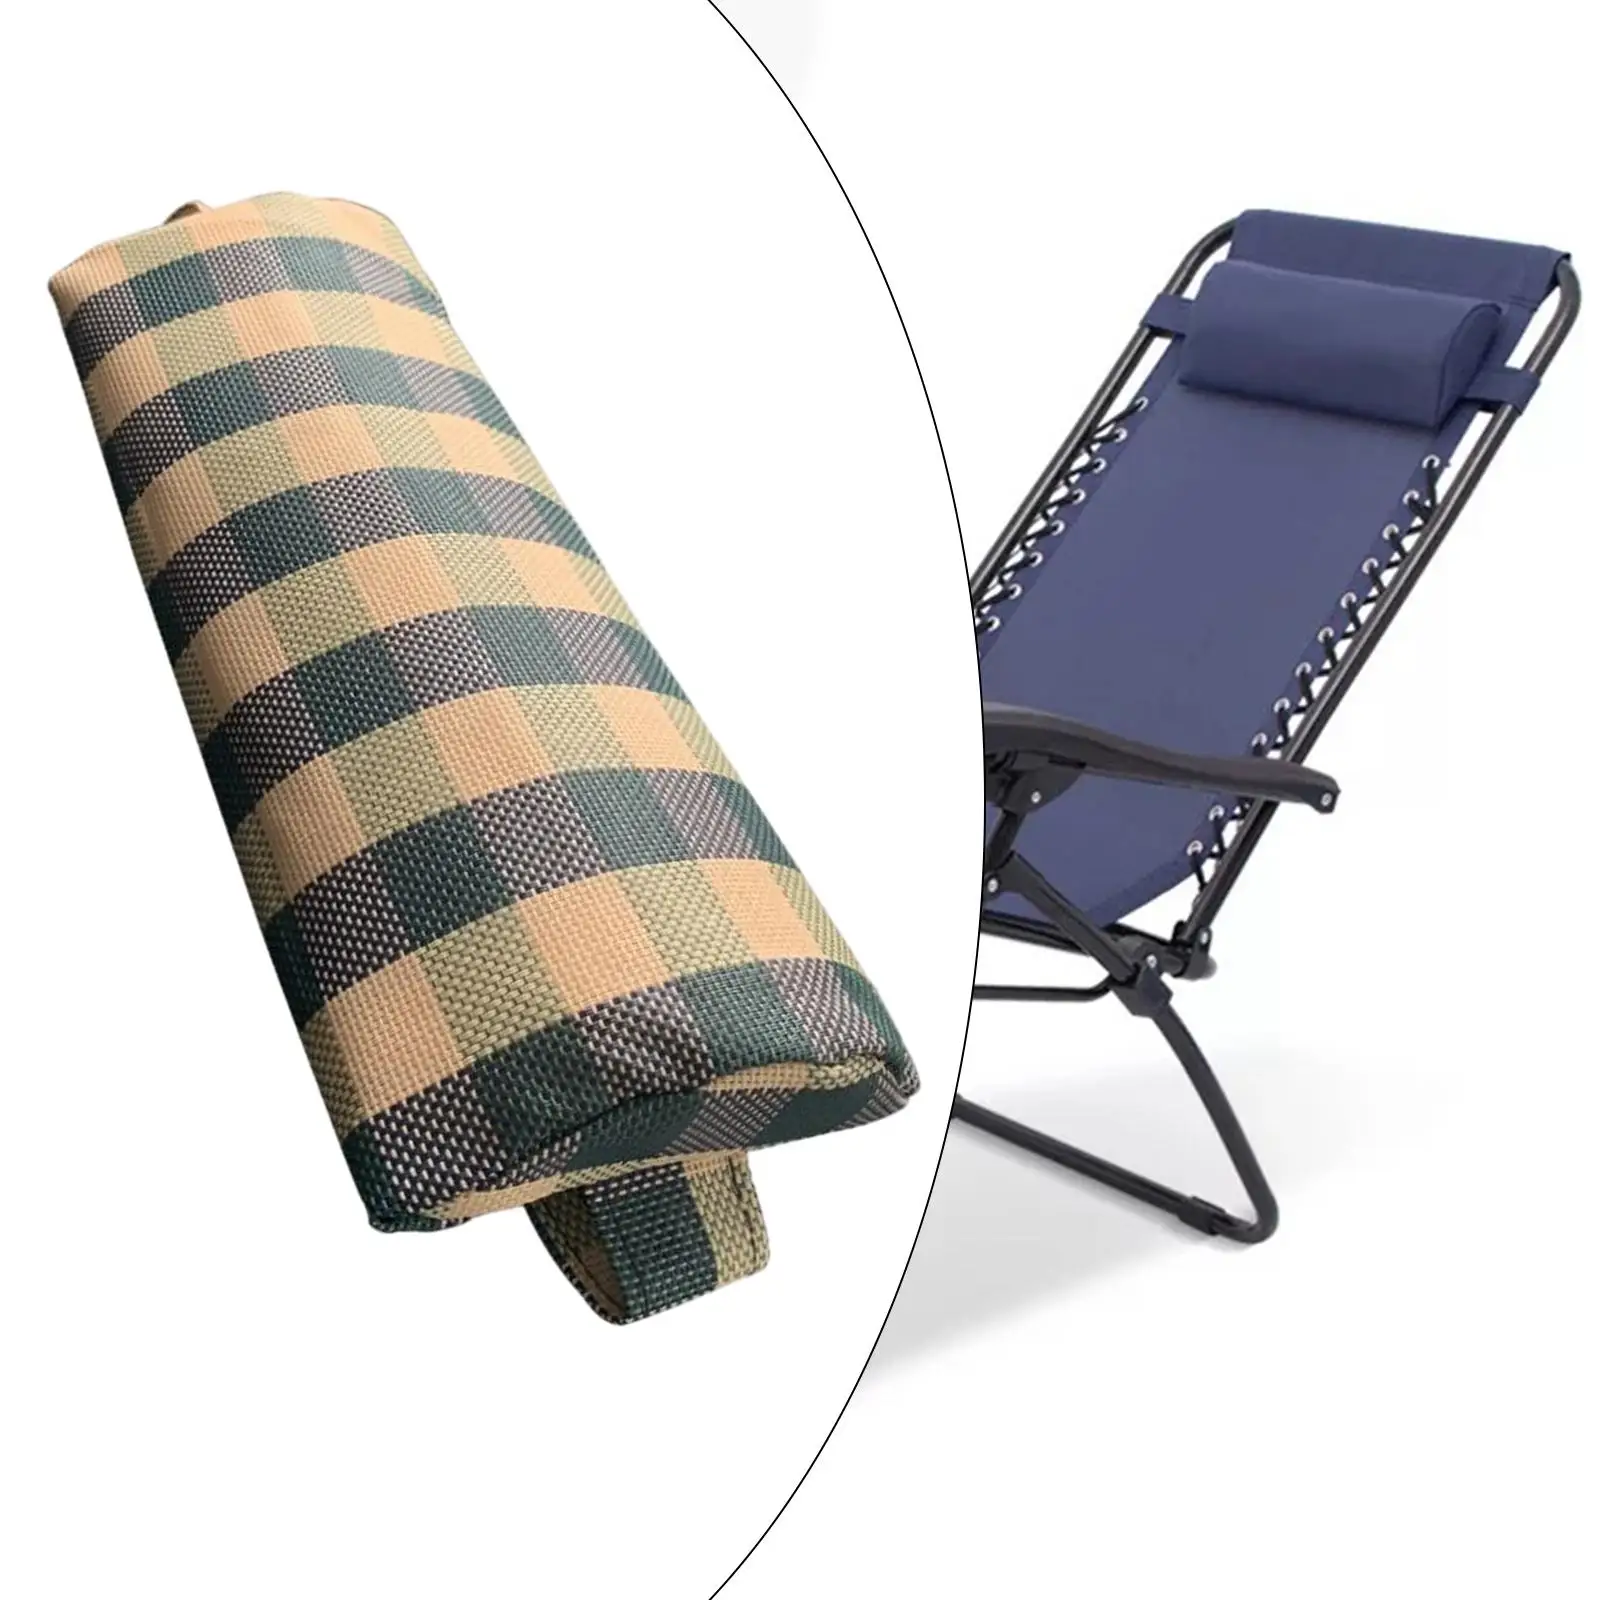 Head Cushion  Removable Adjustable for Folding Chair Picnics Headrest